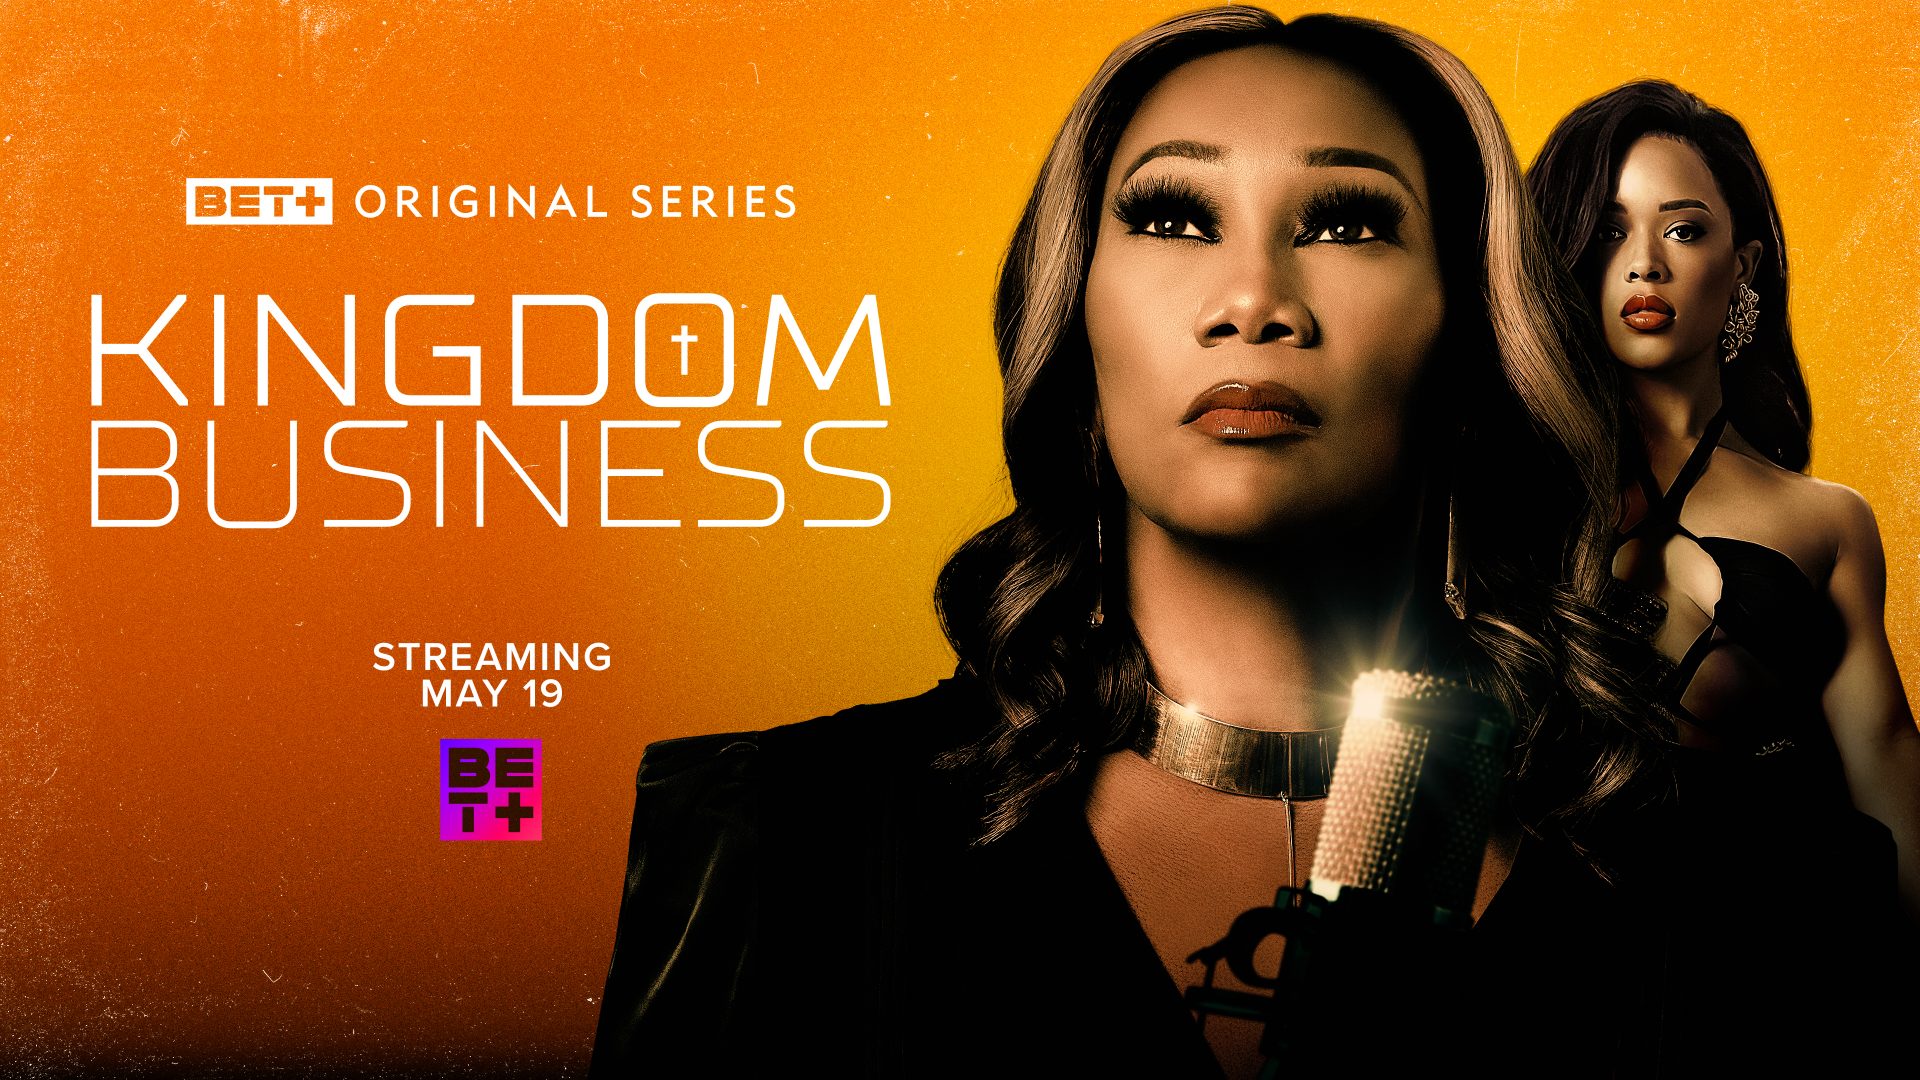 Yolanda Adams and Serayah set to headline new BET+ series 'Kingdom Business'